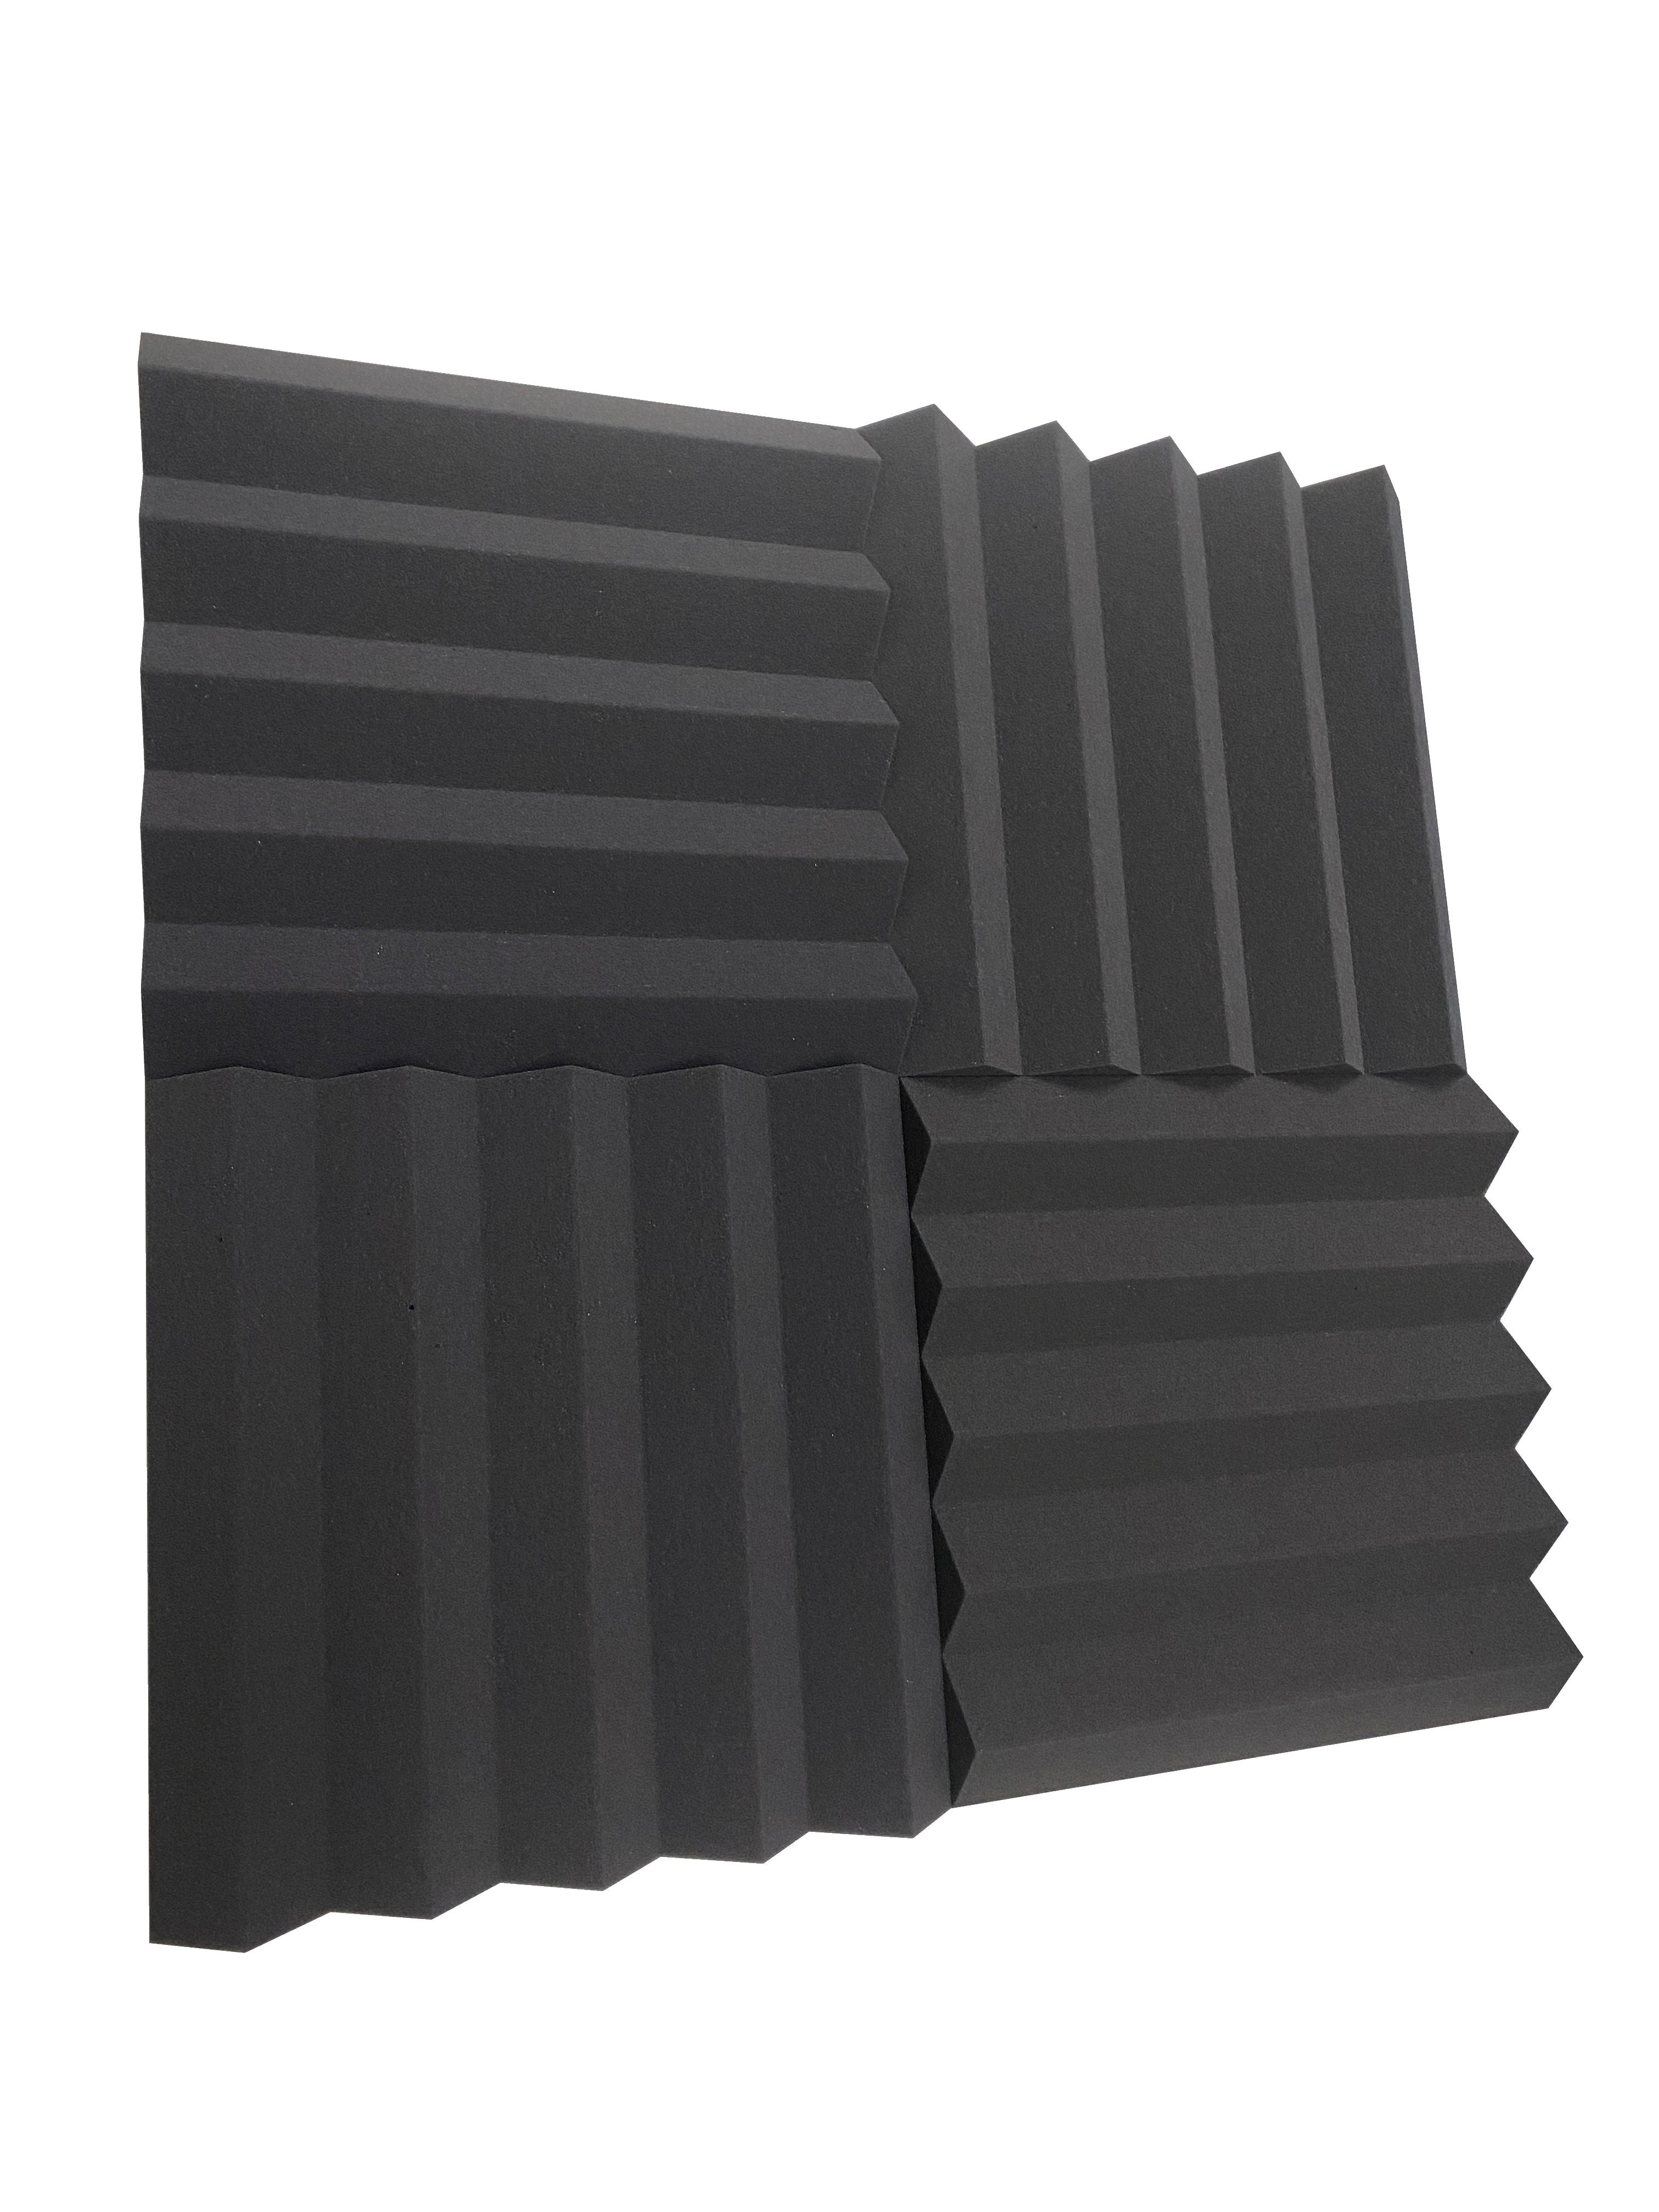 Buy dark-grey Wedge PRO 15&quot; Acoustic Studio Foam Tile Kit